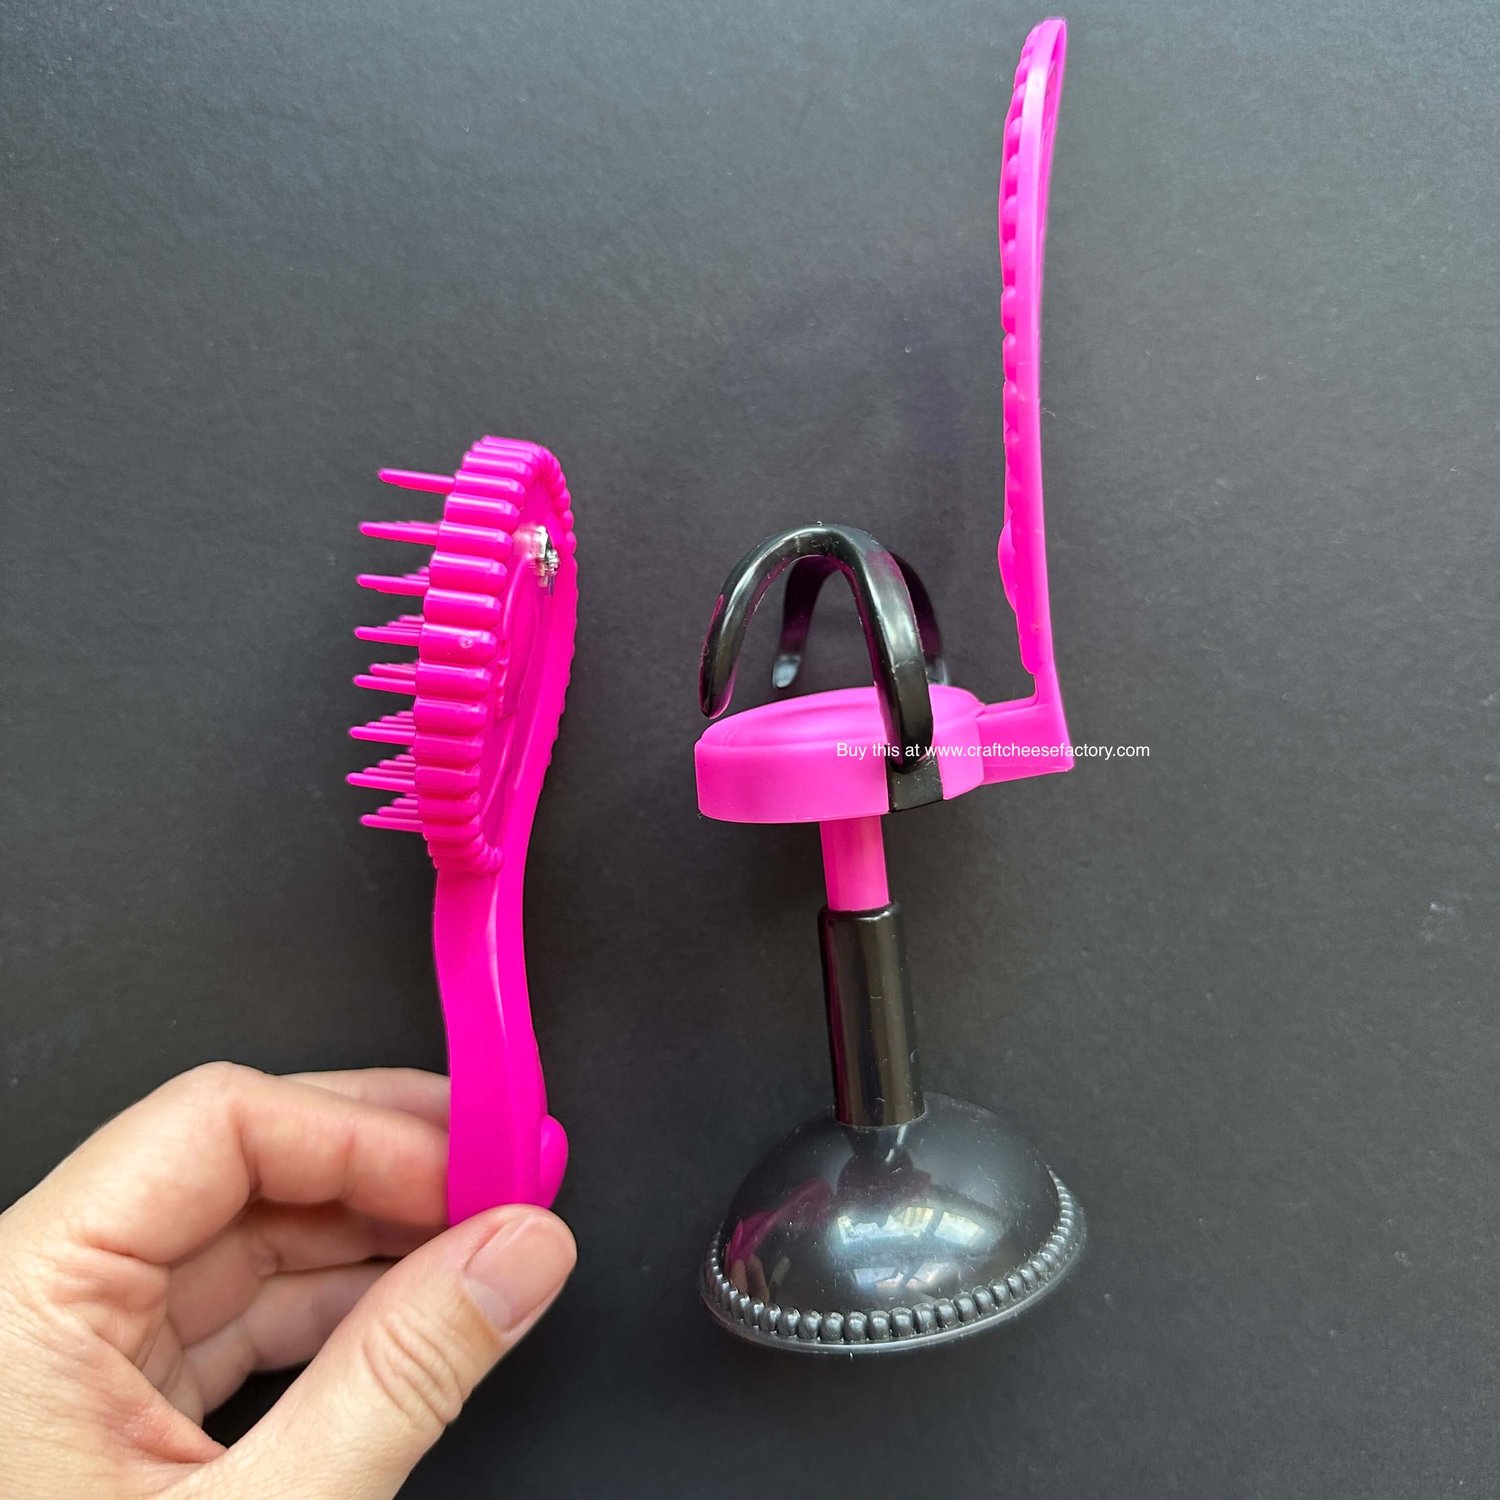 Barbie ponytail silhouette hair brush toy salon chair —